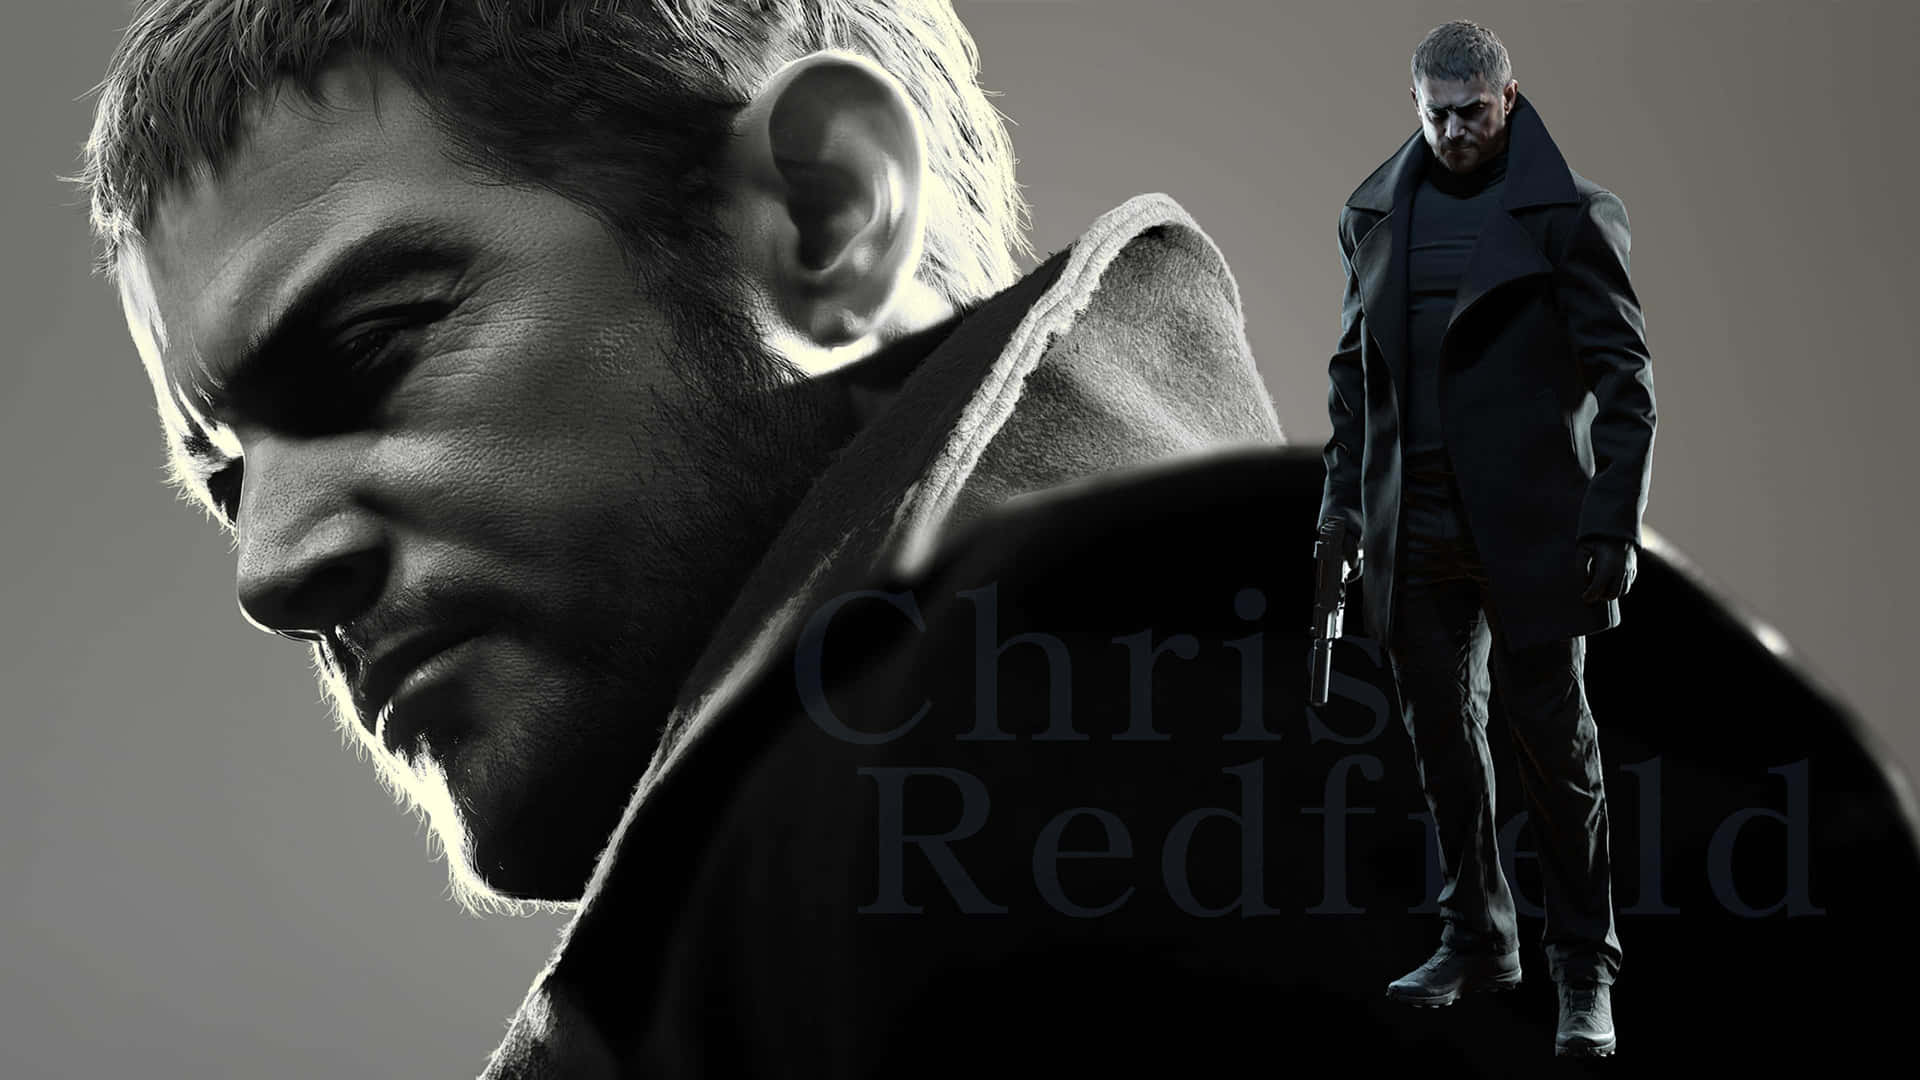 Chris Redfield, The Resilient Warrior Of Resident Evil Wallpaper